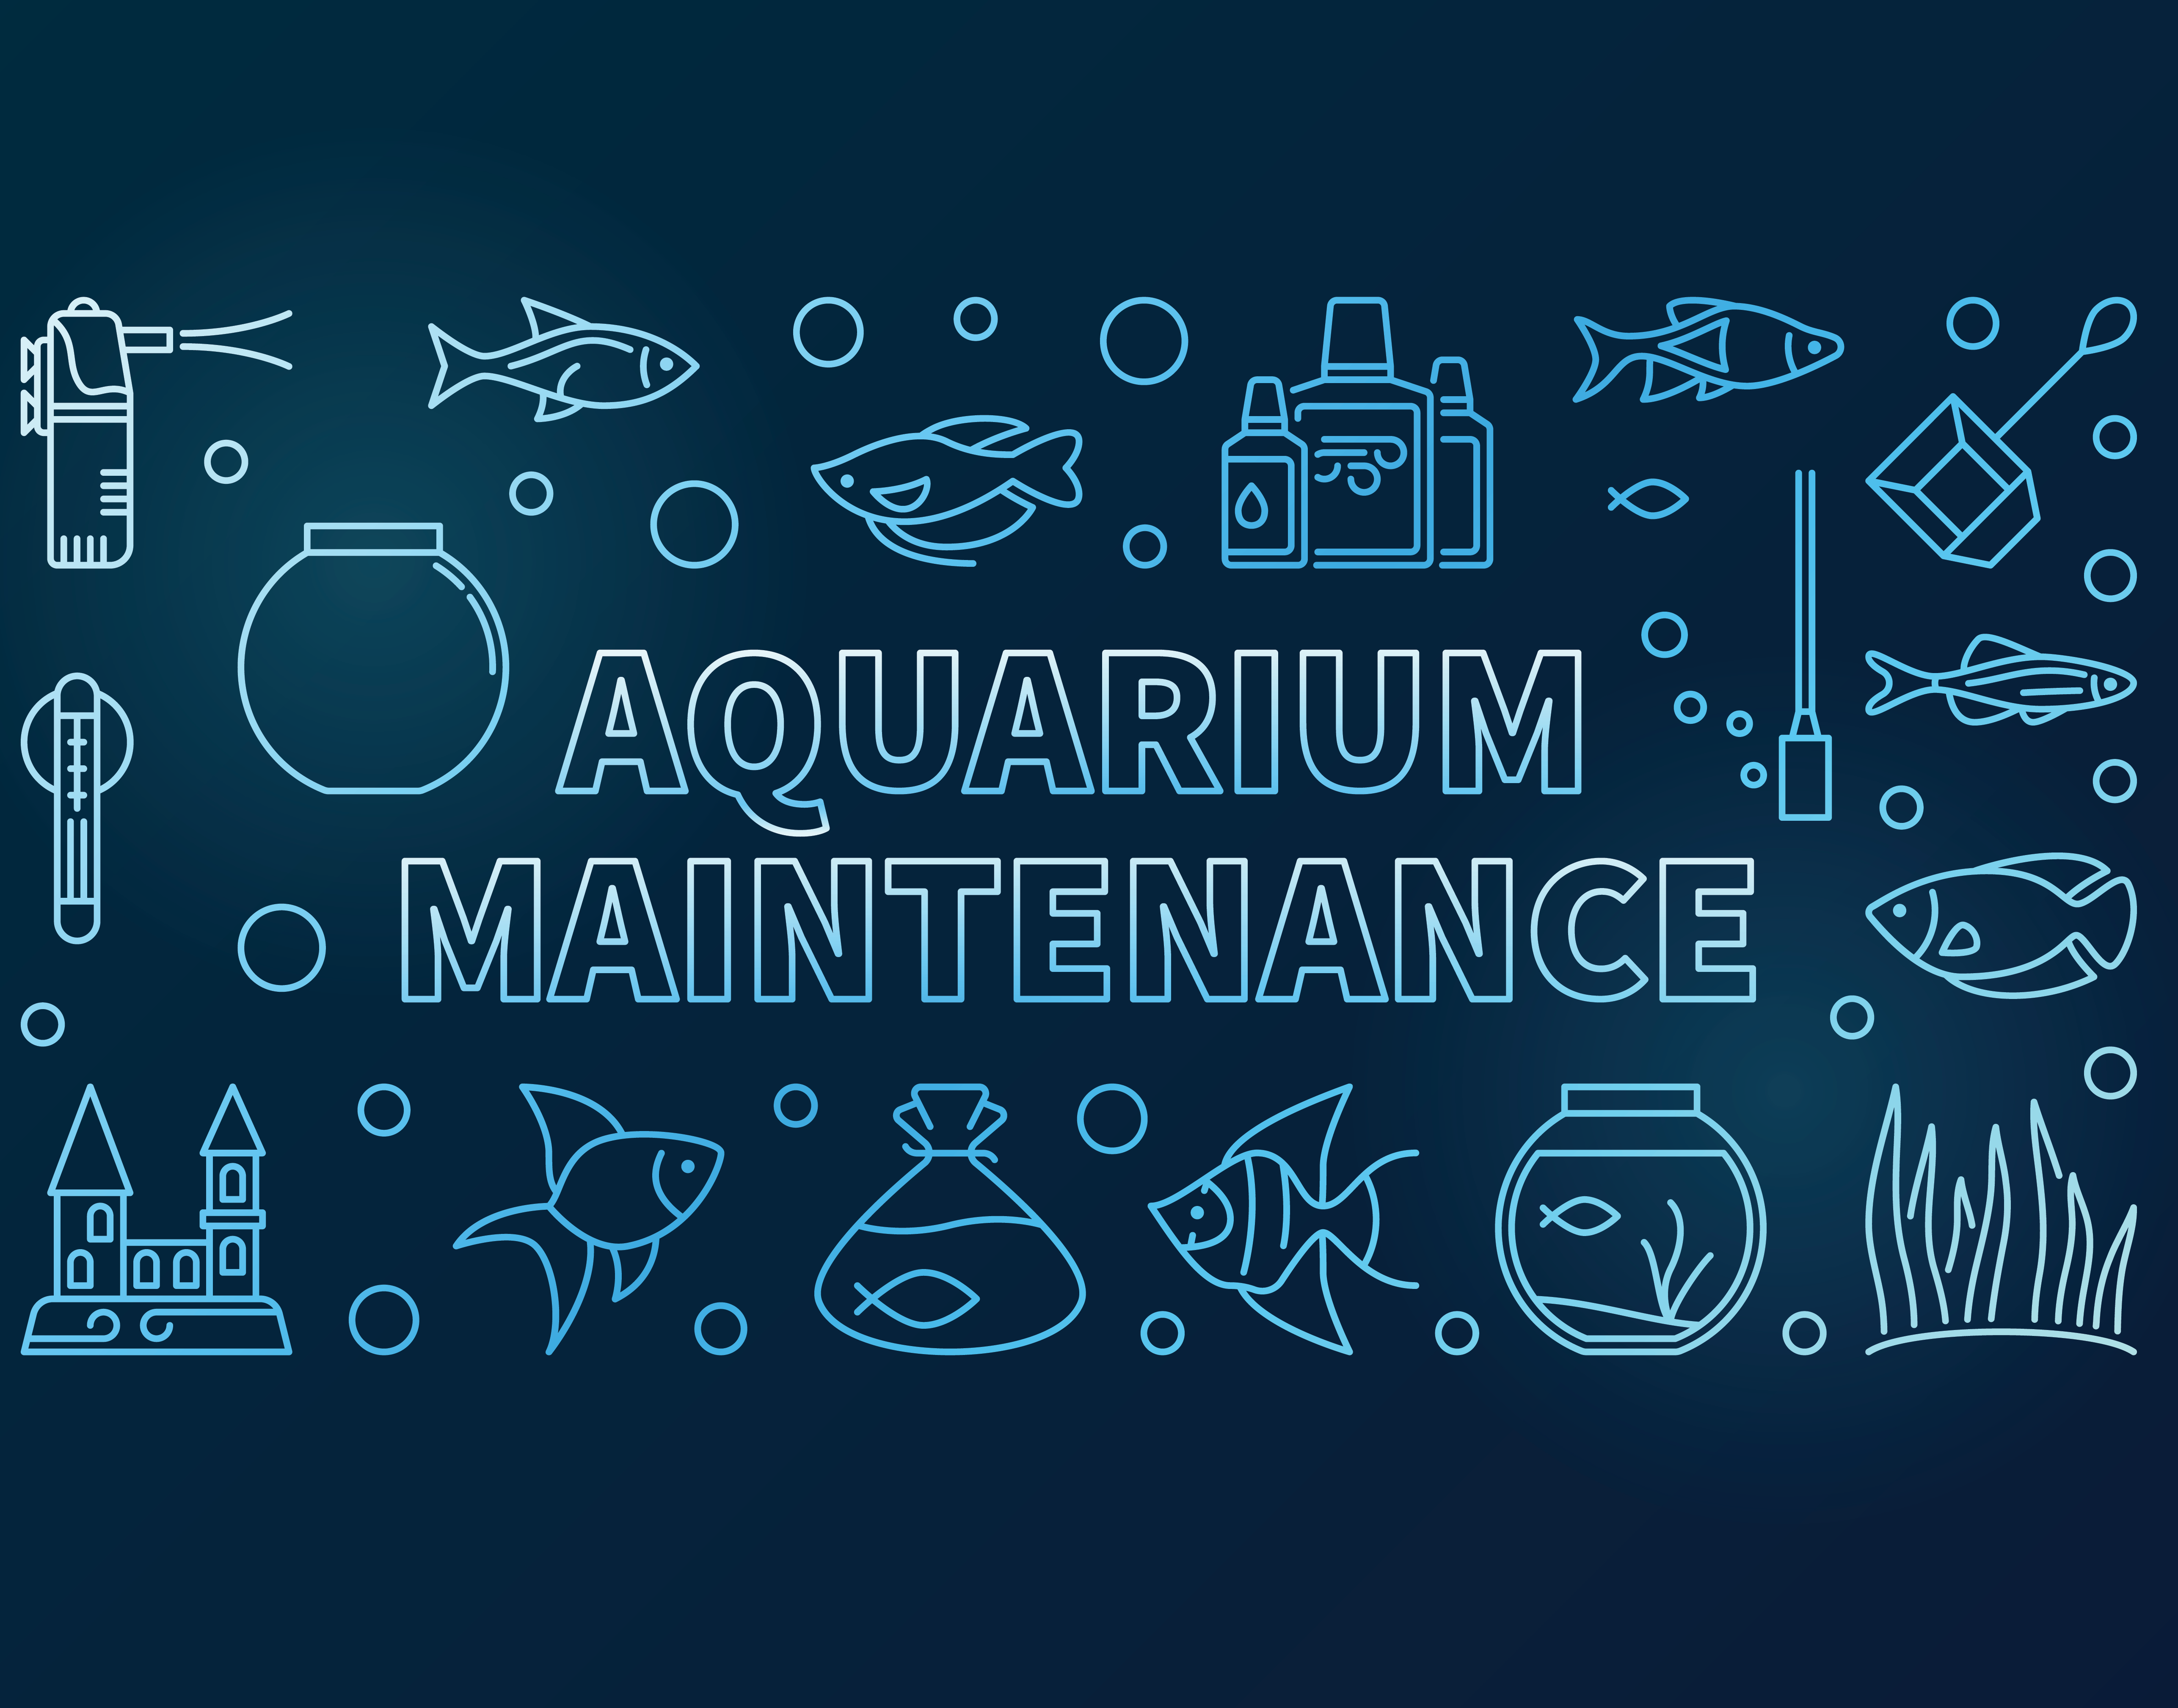 Aquarium Maintenance Help!